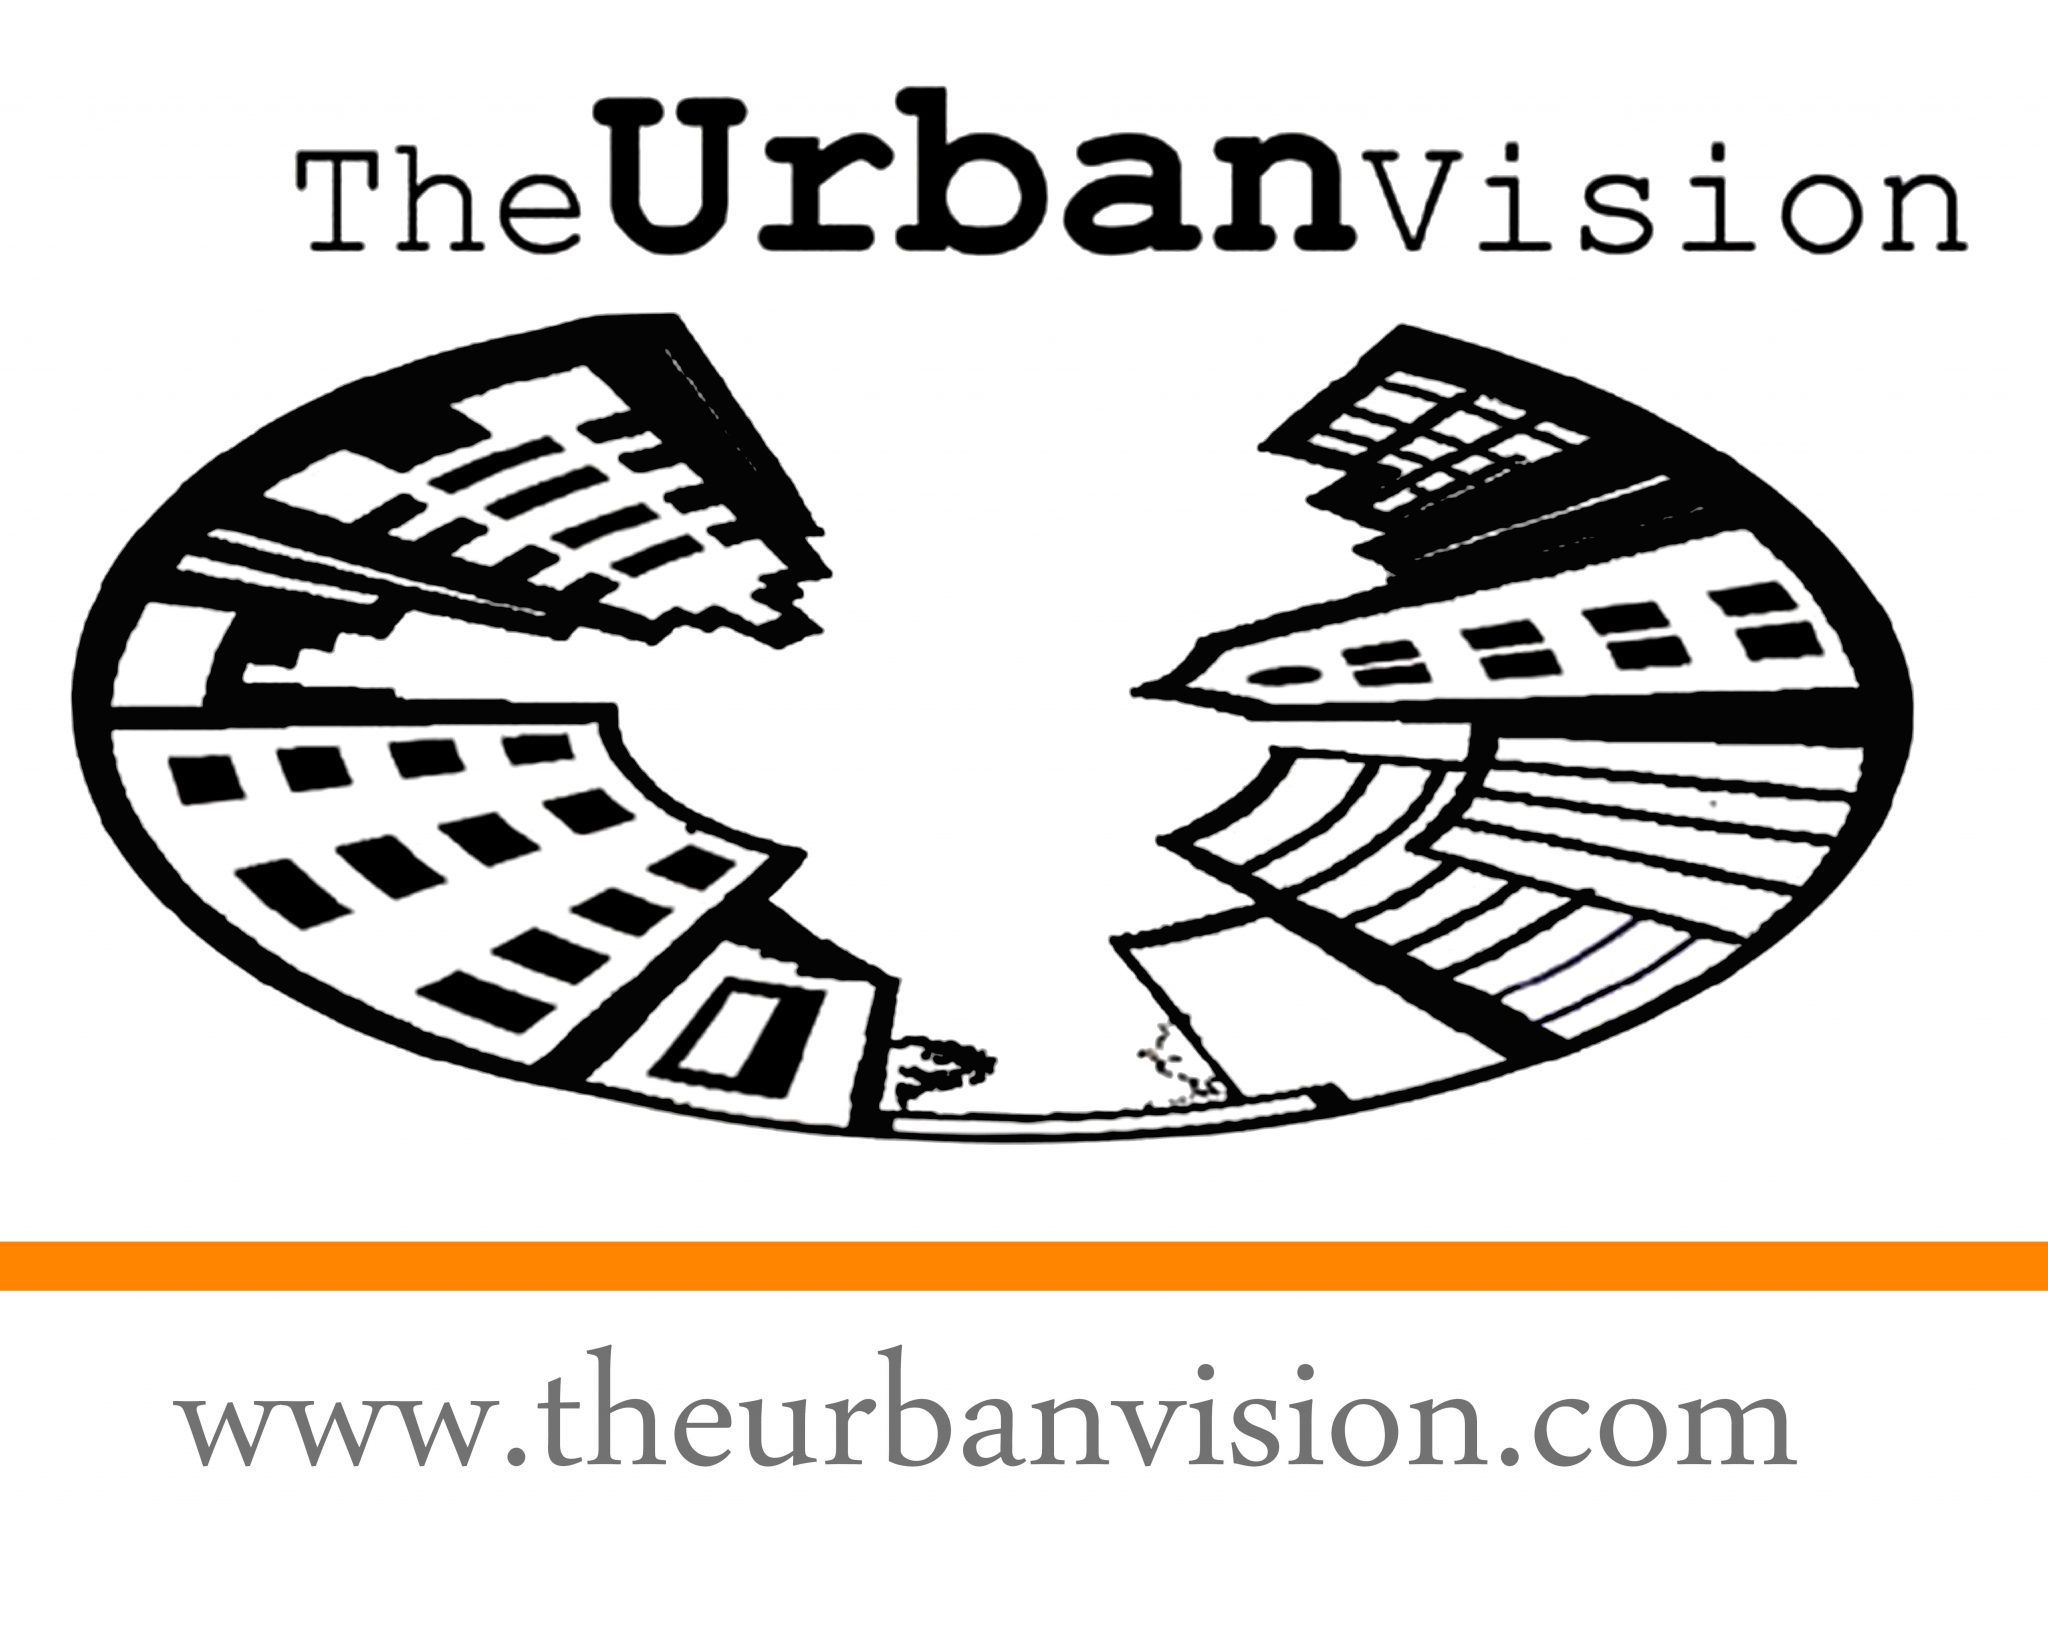 The Urban Vision logo